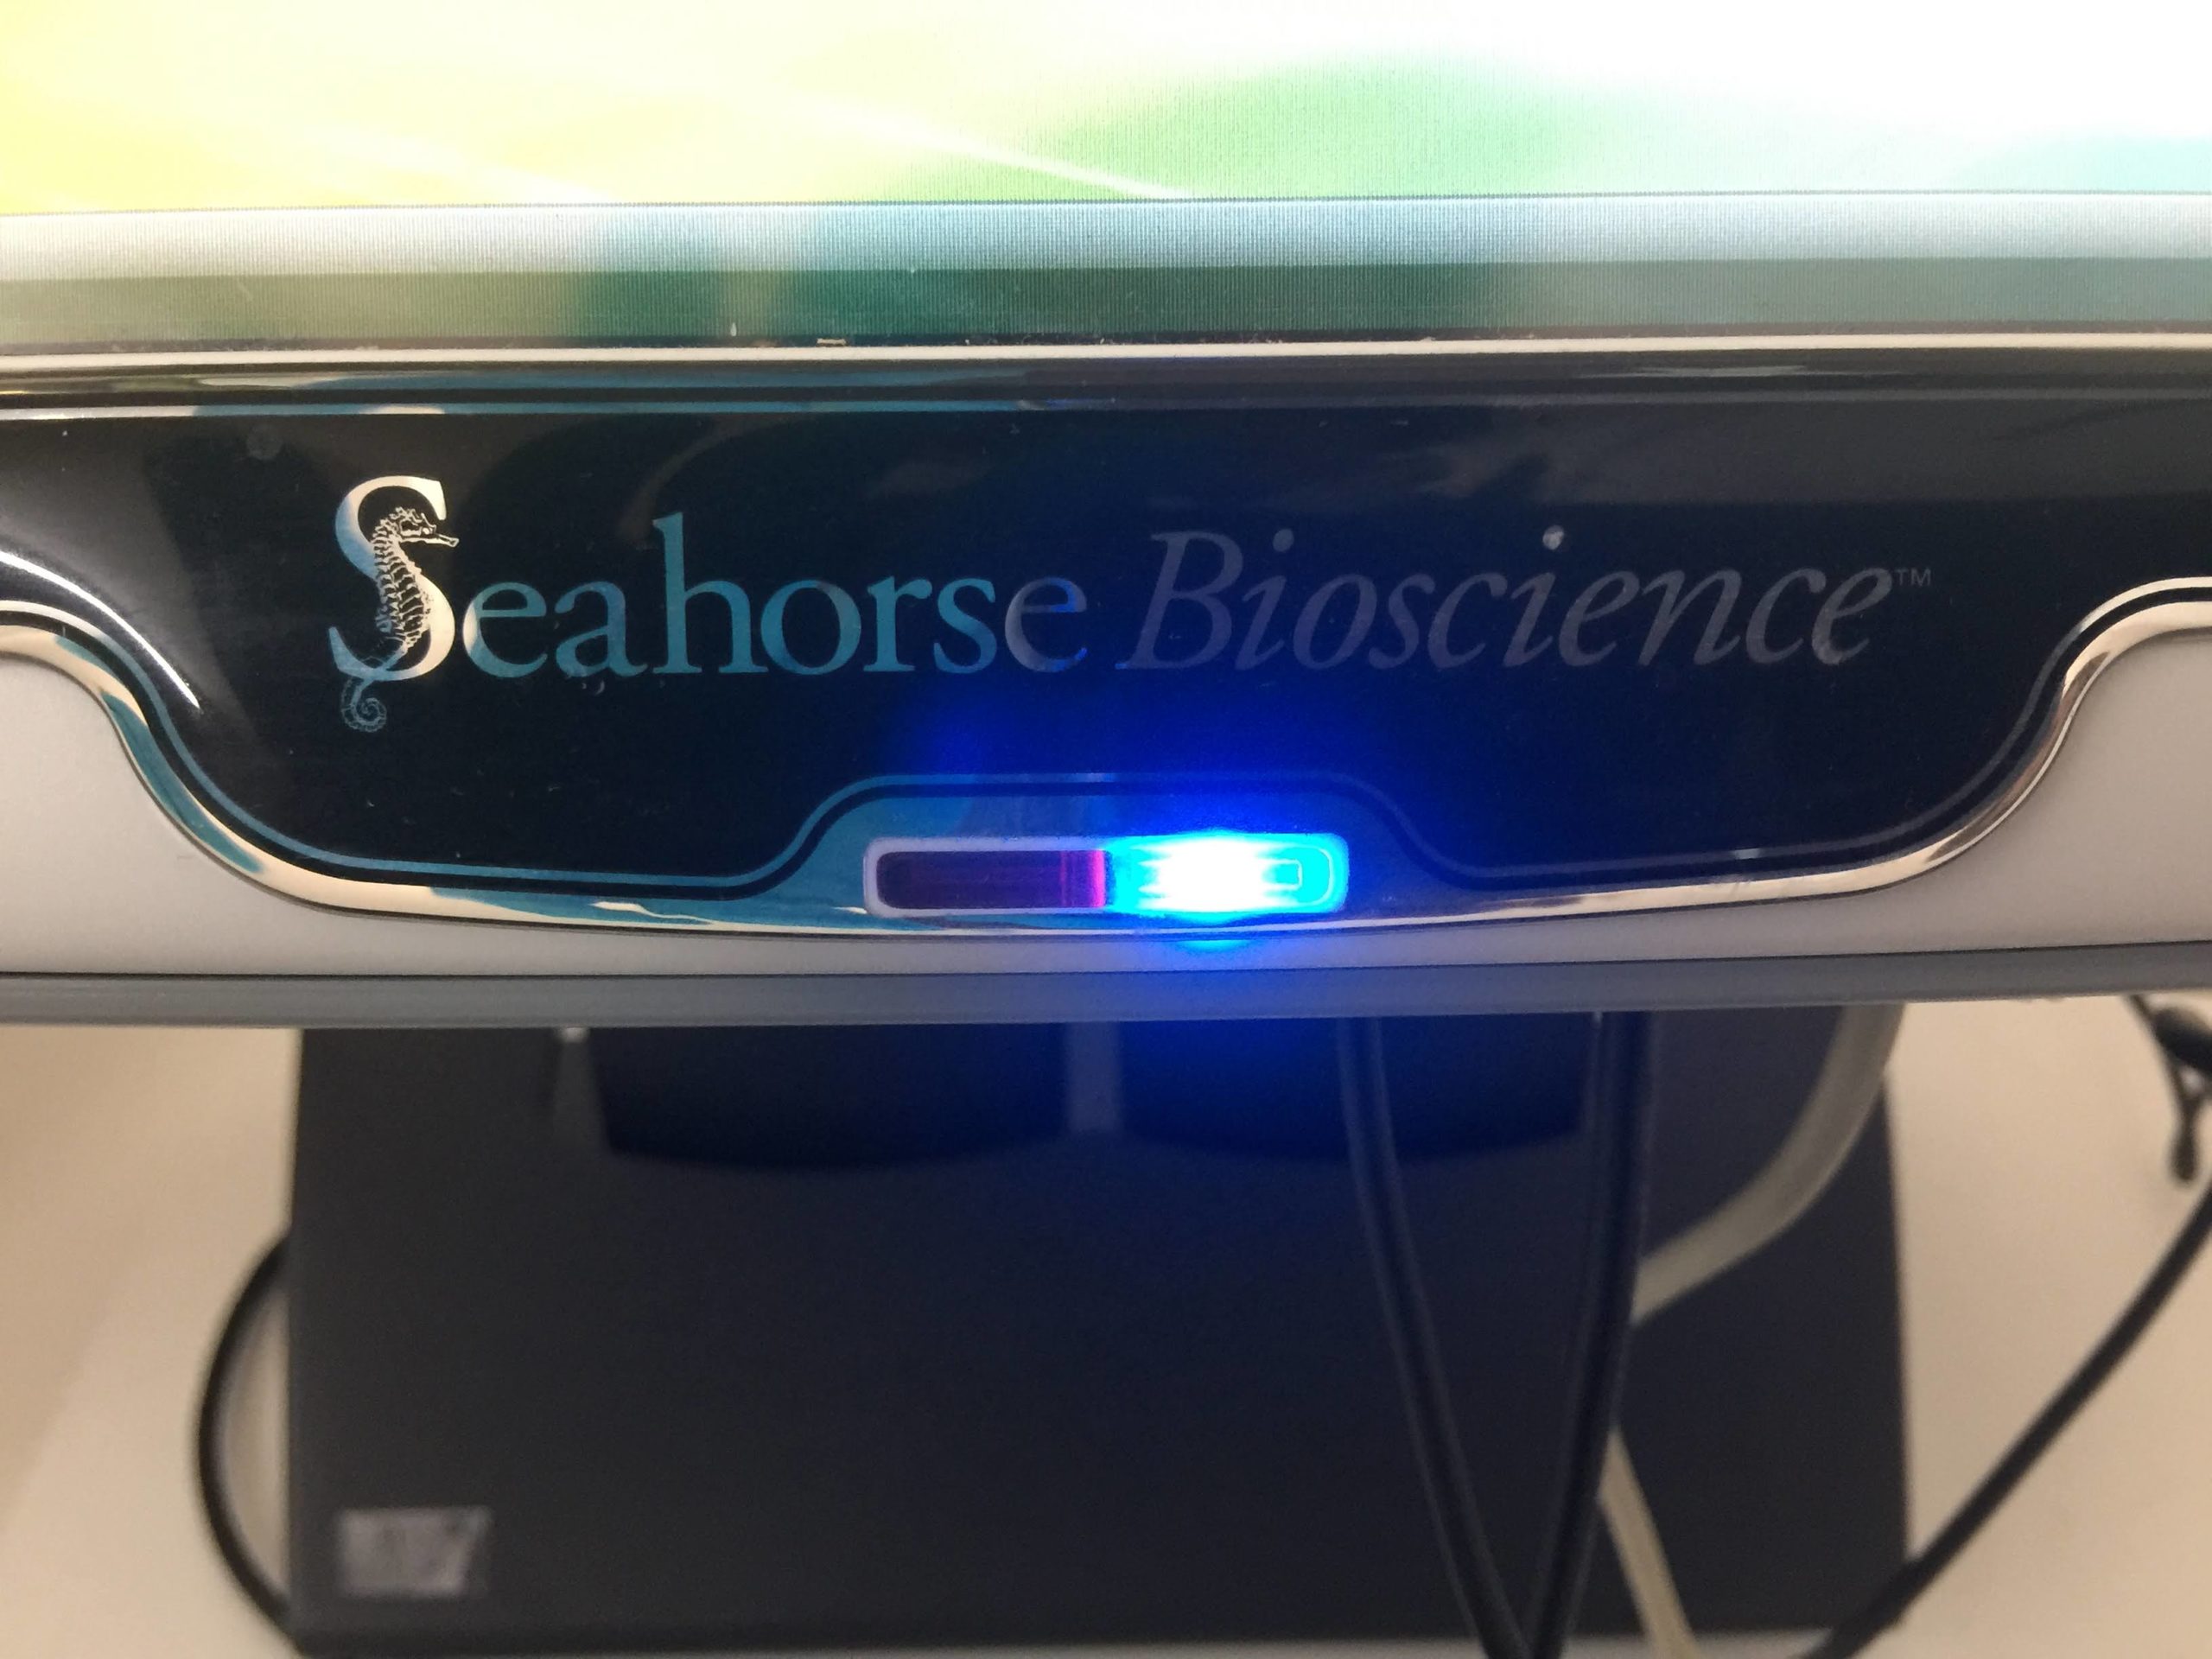 seahorse xf24 extracellular flux analyzer